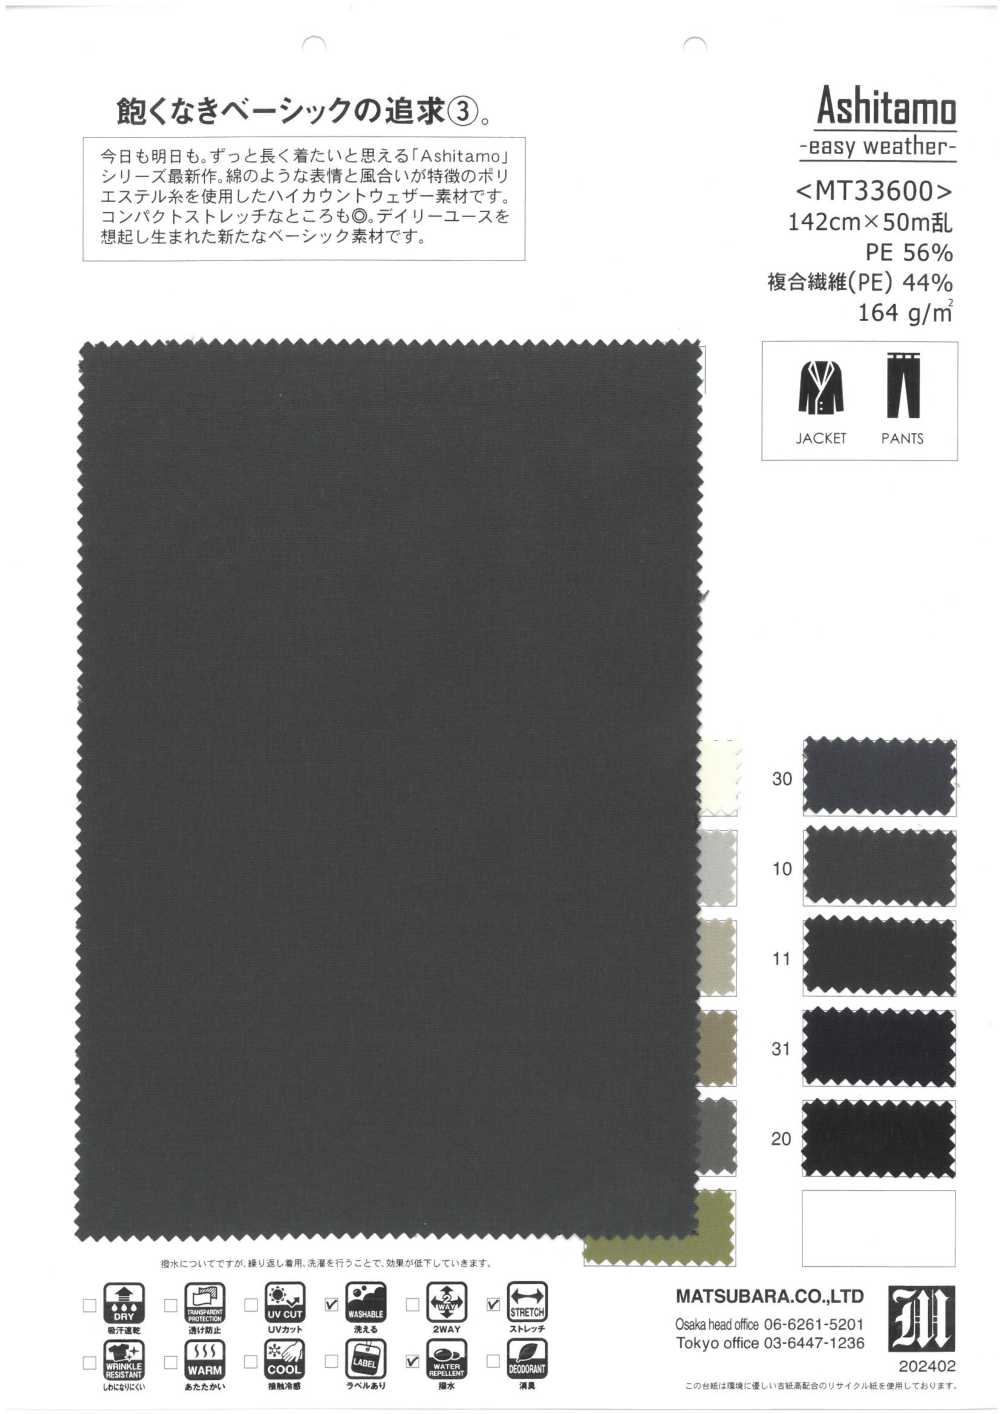 MT33600 Ashitamo -clima Fácil-[Fabrica Textil] Matsubara